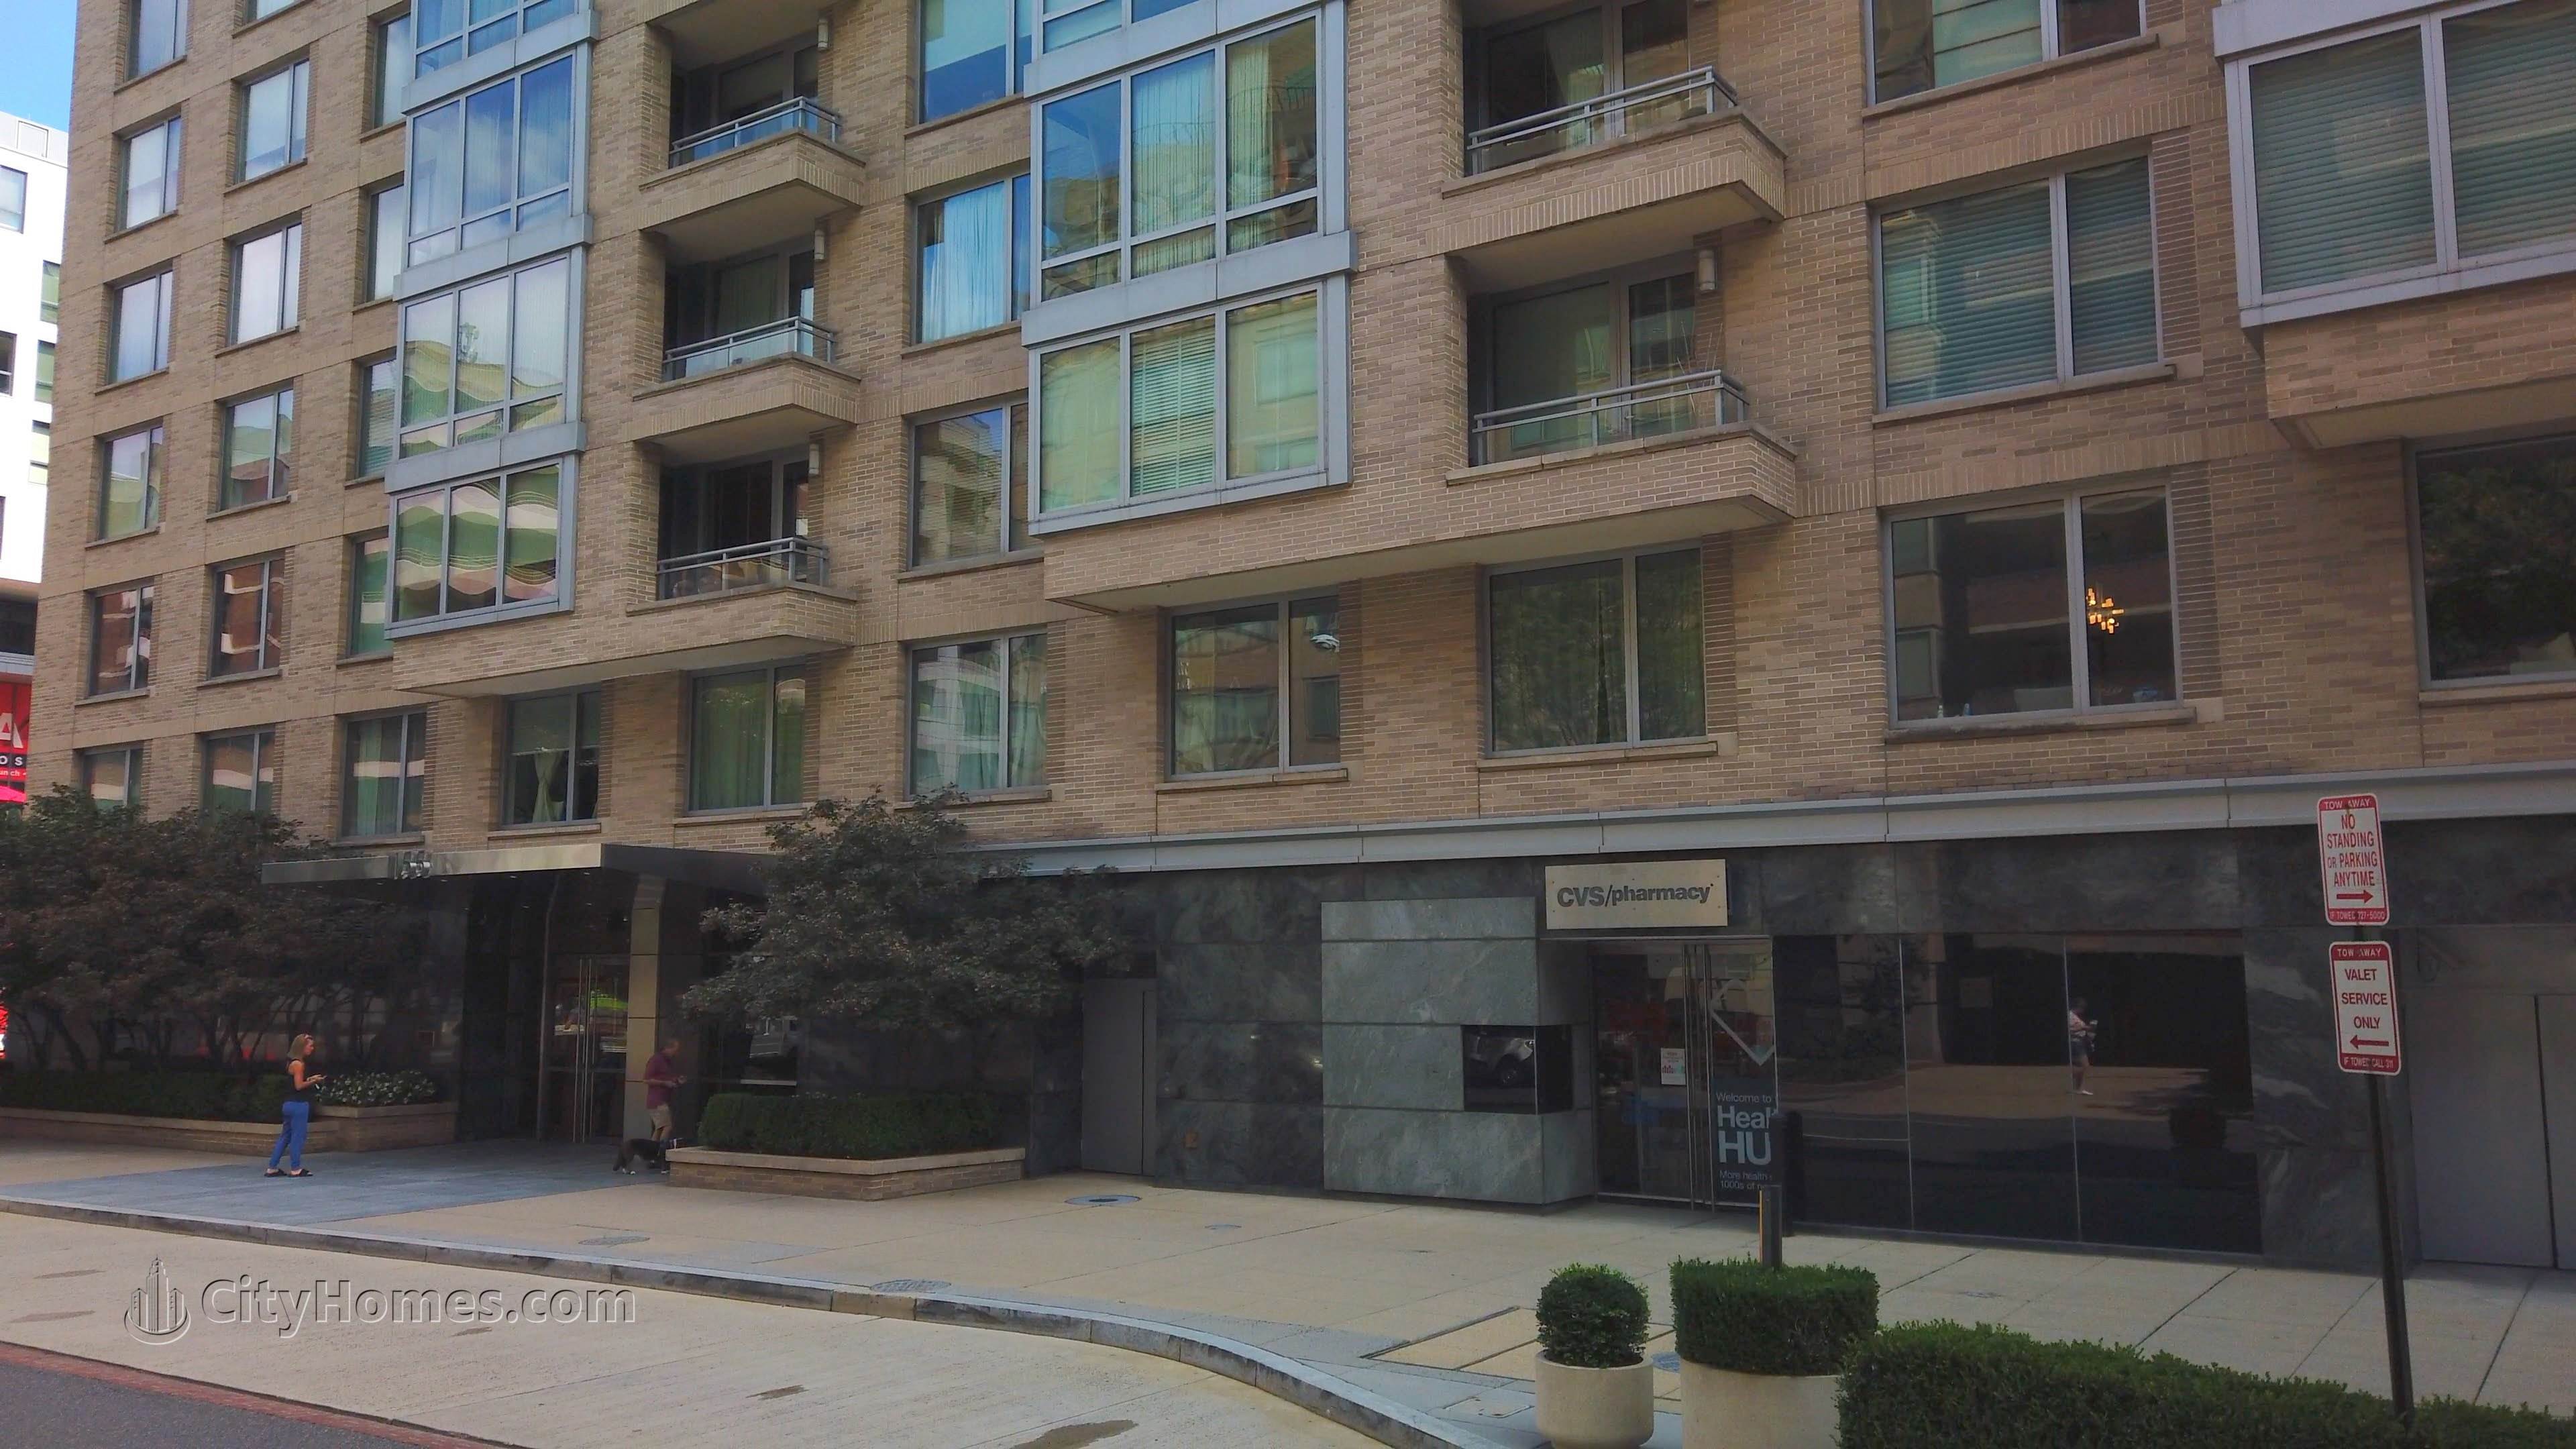 5. The Ritz-Carlton Washington building at 1111 & 1155 23rd Street NW, West End, Washington, DC 20037